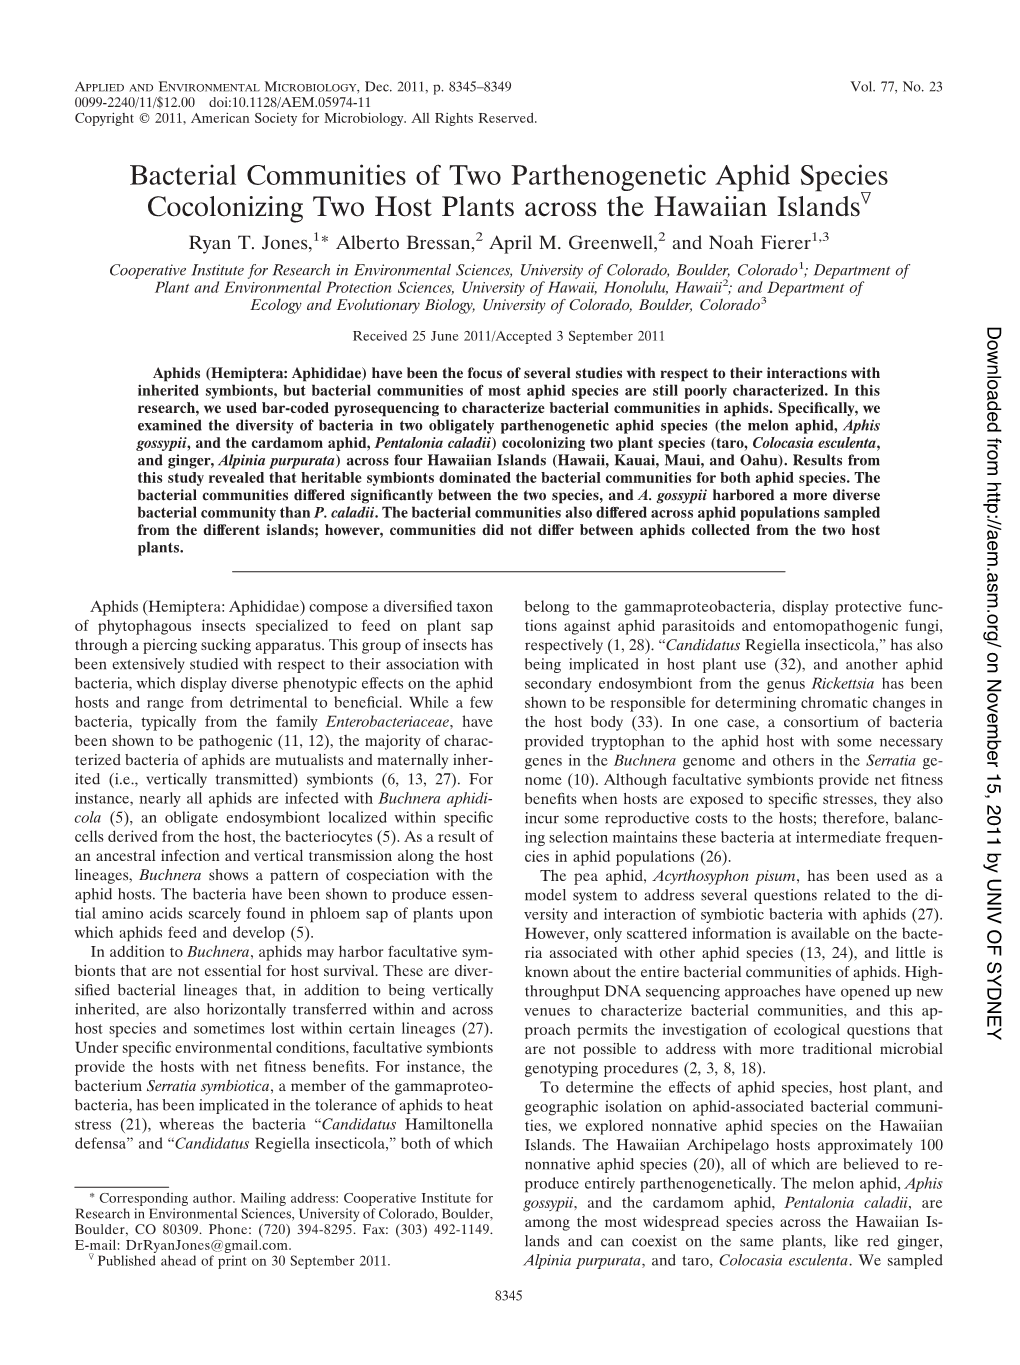 Bacterial Communities of Two Parthenogenetic Aphid Species Cocolonizing Two Host Plants Across the Hawaiian Islandsᰔ Ryan T